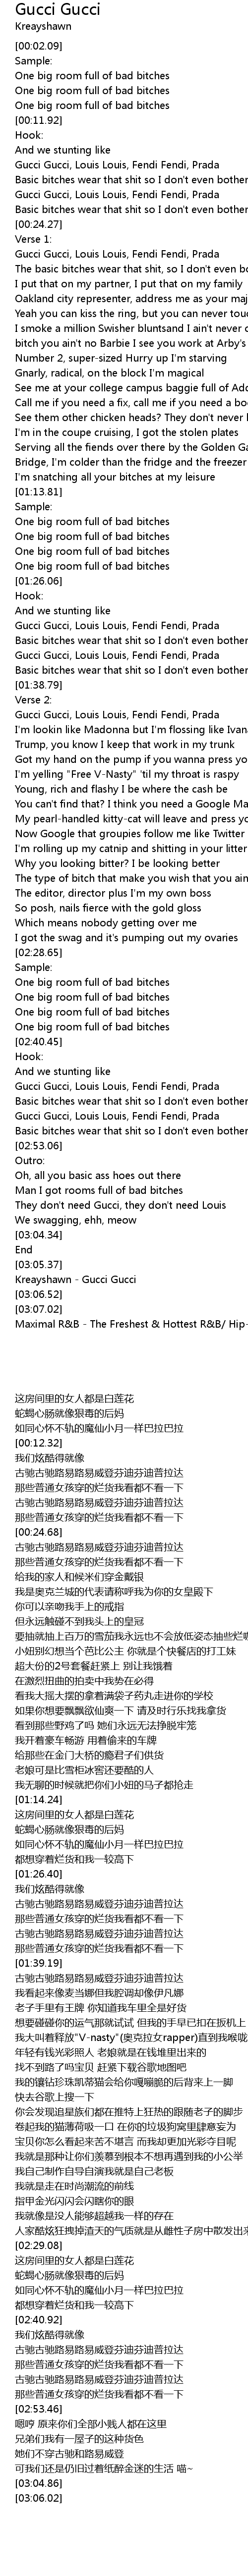 Gucci Gucci Lyrics Follow Lyrics